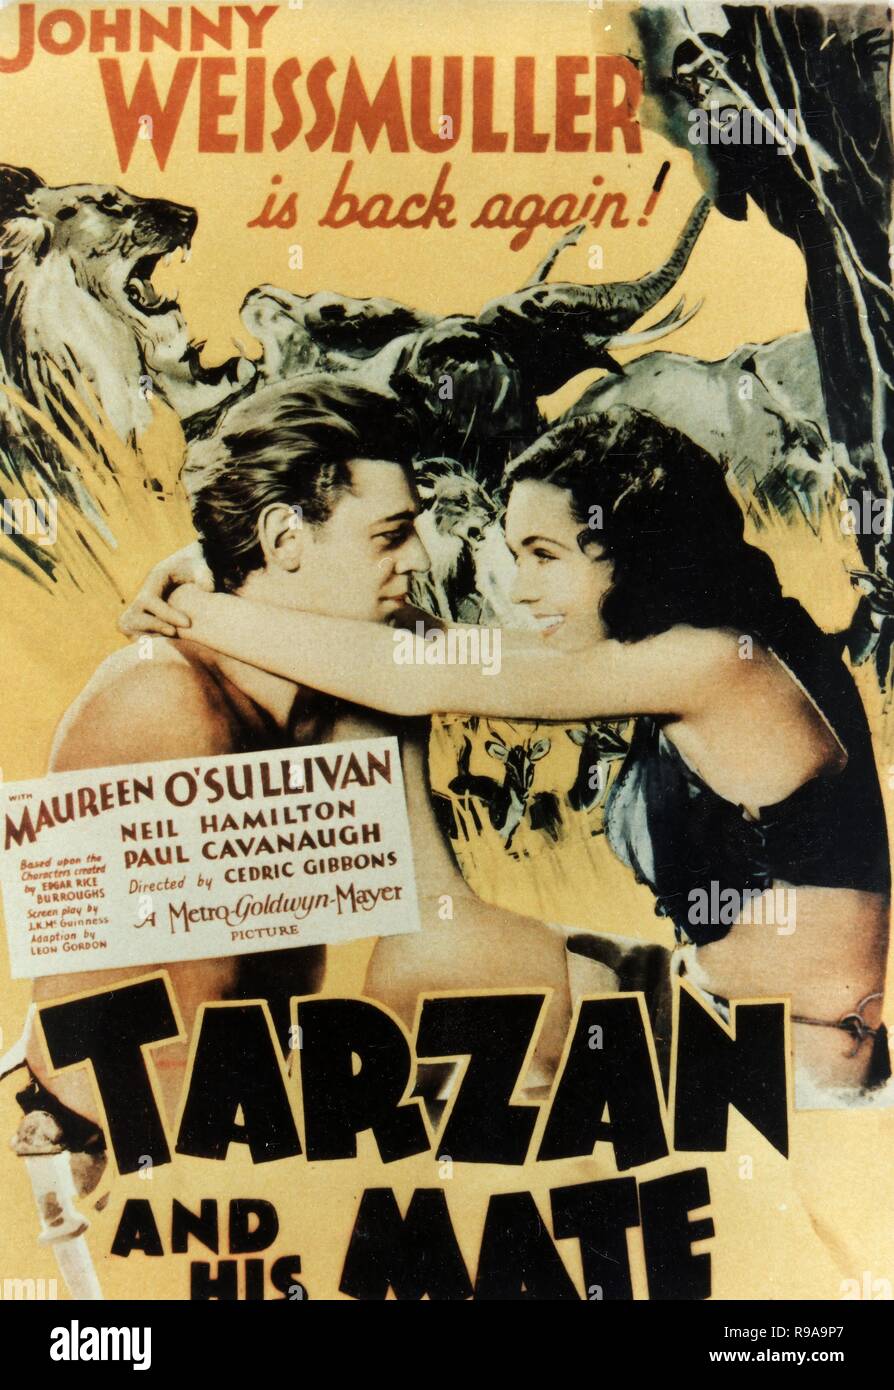 Original film title: TARZAN AND HIS MATE. English title: TARZAN AND HIS MATE. Year: 1934. Director: CEDRIC GIBBONS. Credit: M.G.M / Album Stock Photo